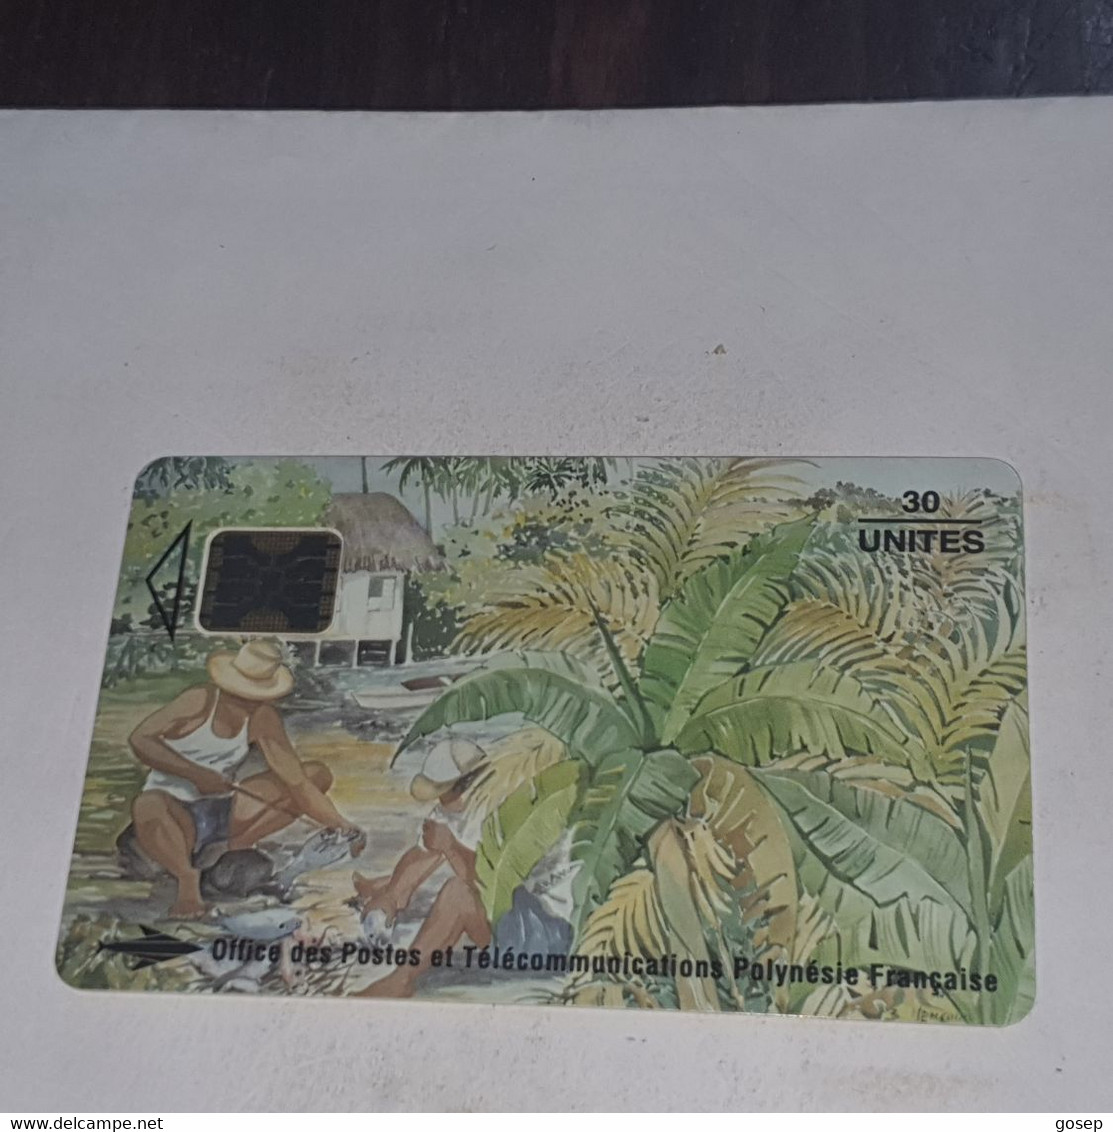 French Polynesia-(FP-?)office Des Postes-(19)(C47100867)-(30units)-(tirage-?)-used Card+1card Prepiad Free - Polynésie Française